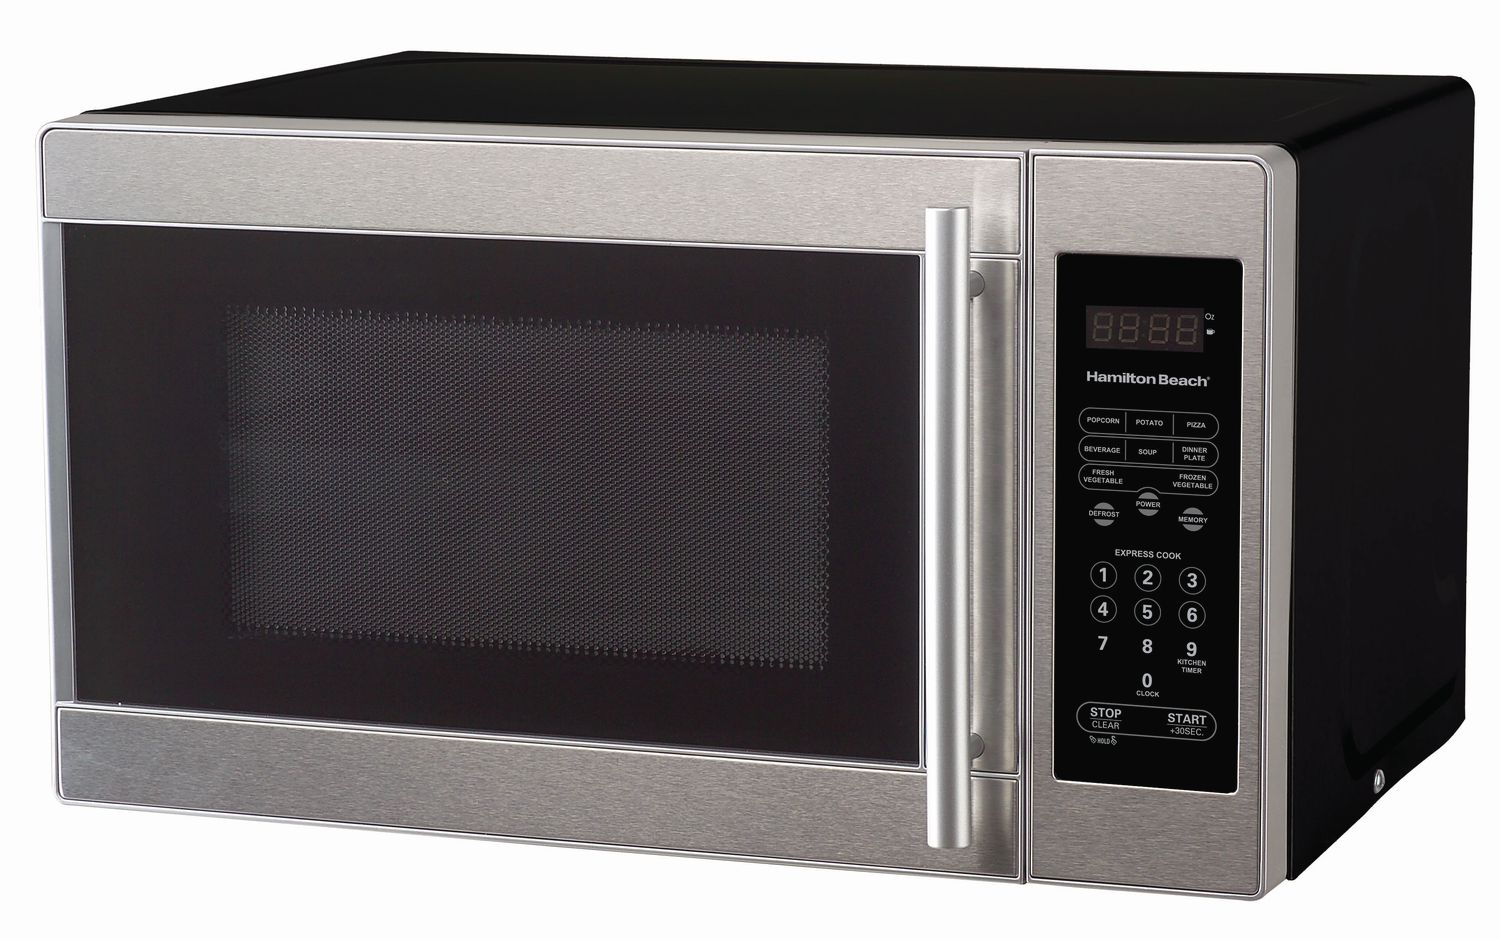 microwave walmart canada